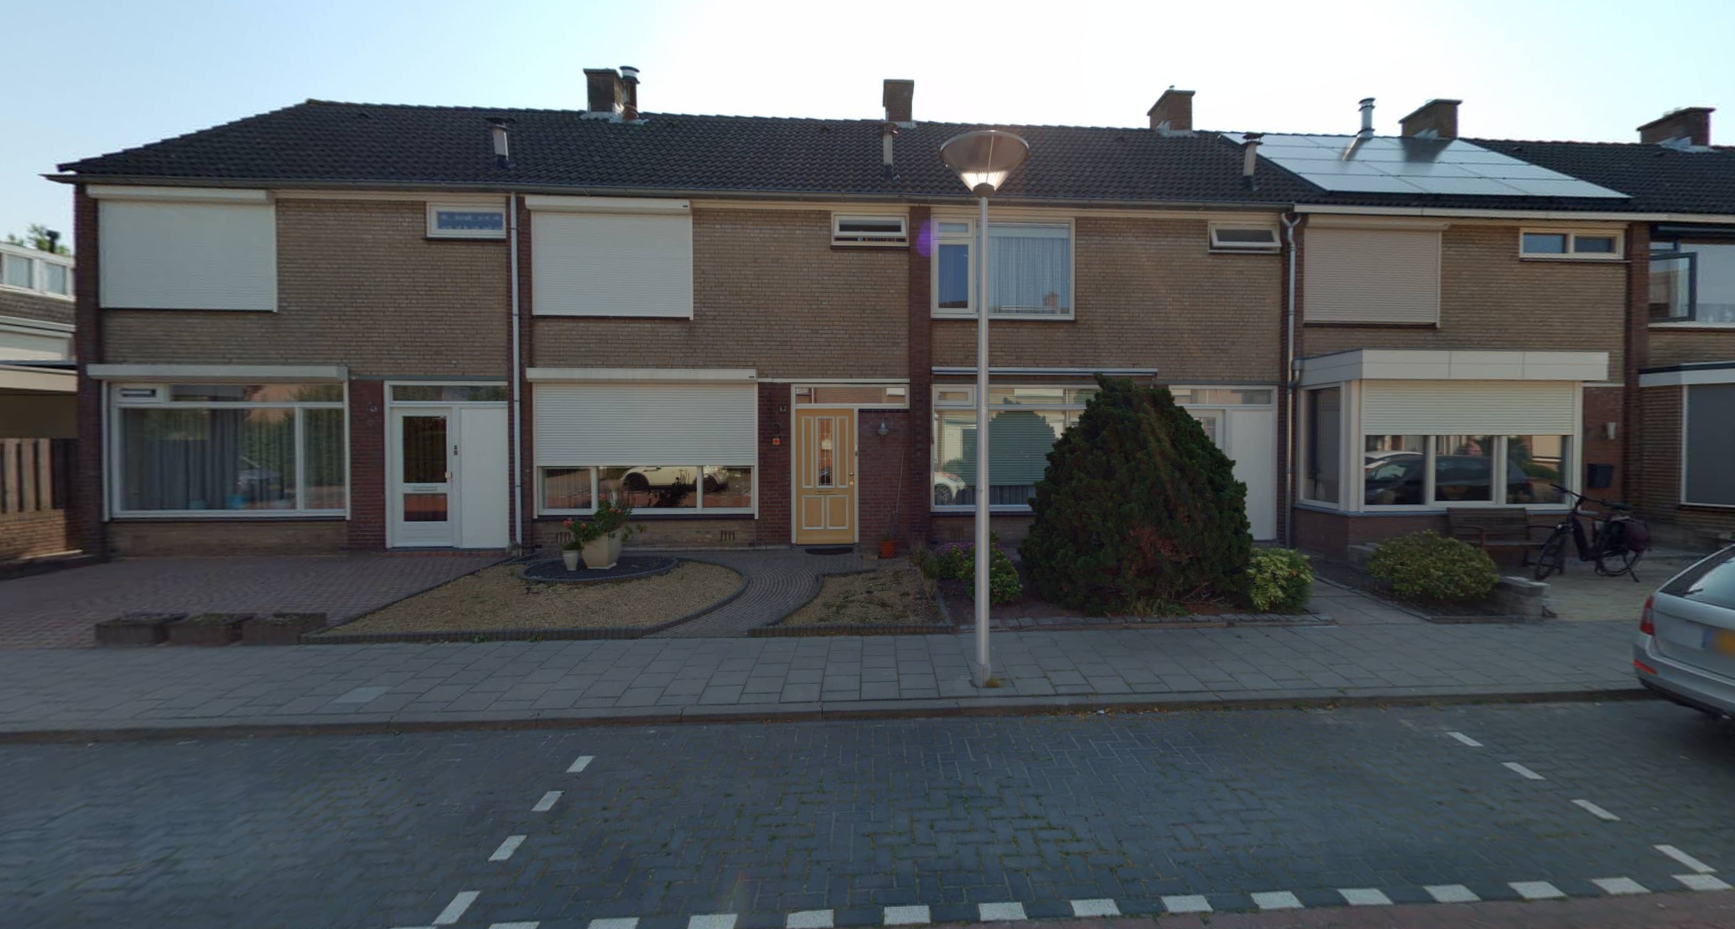 Eikstraat 5, 4651 KE Steenbergen, Nederland